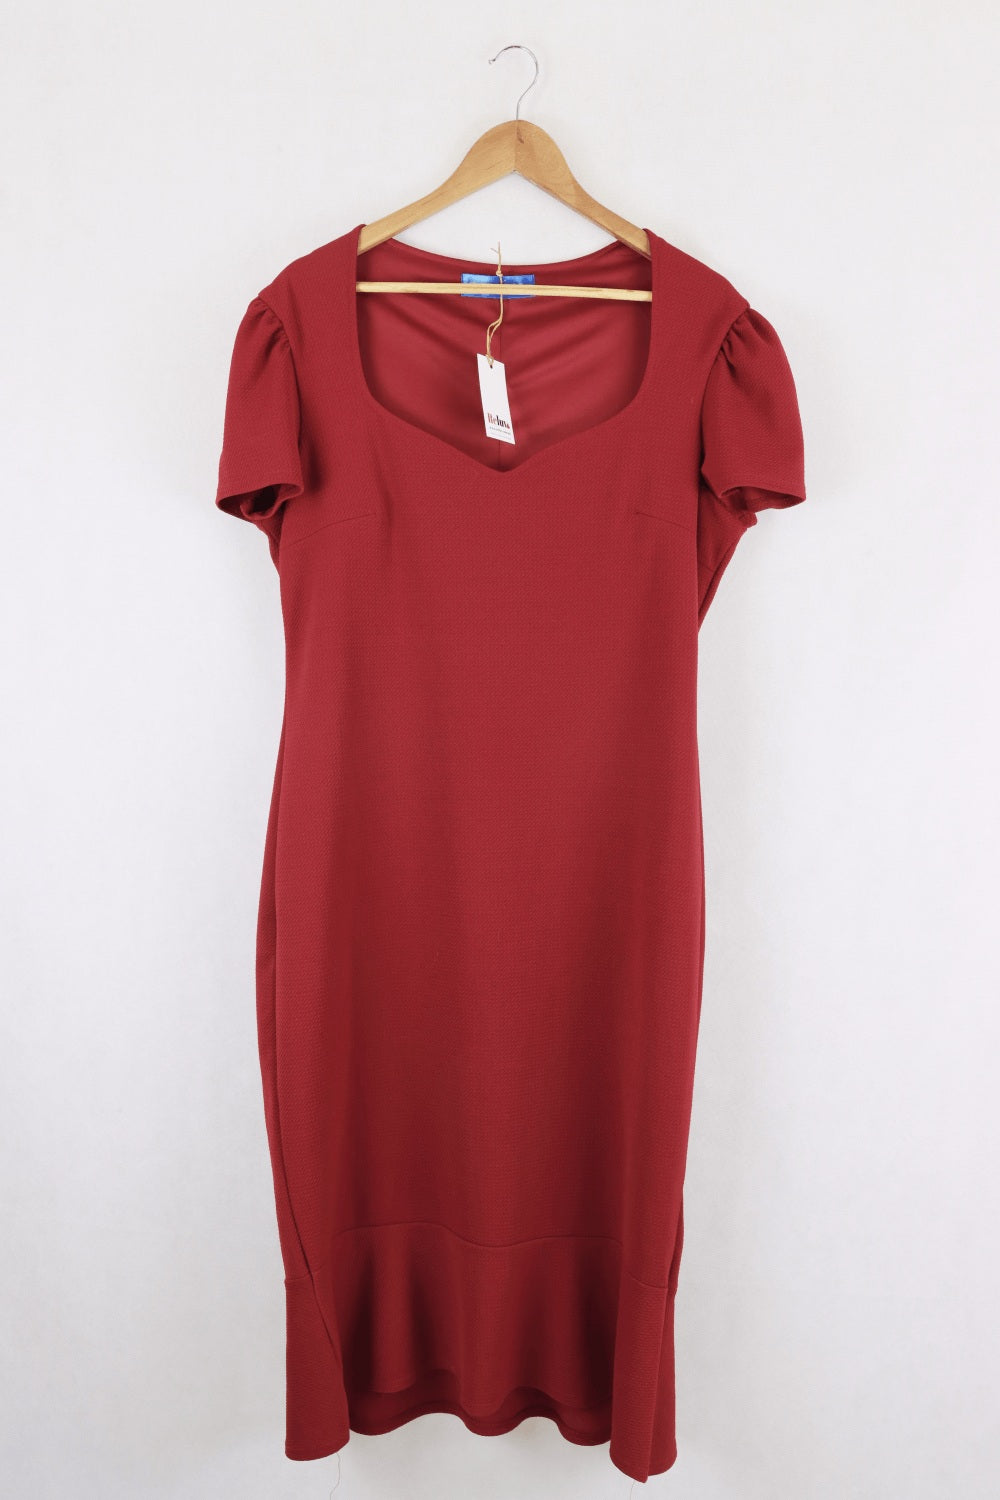 Goddiva Red Dress 22